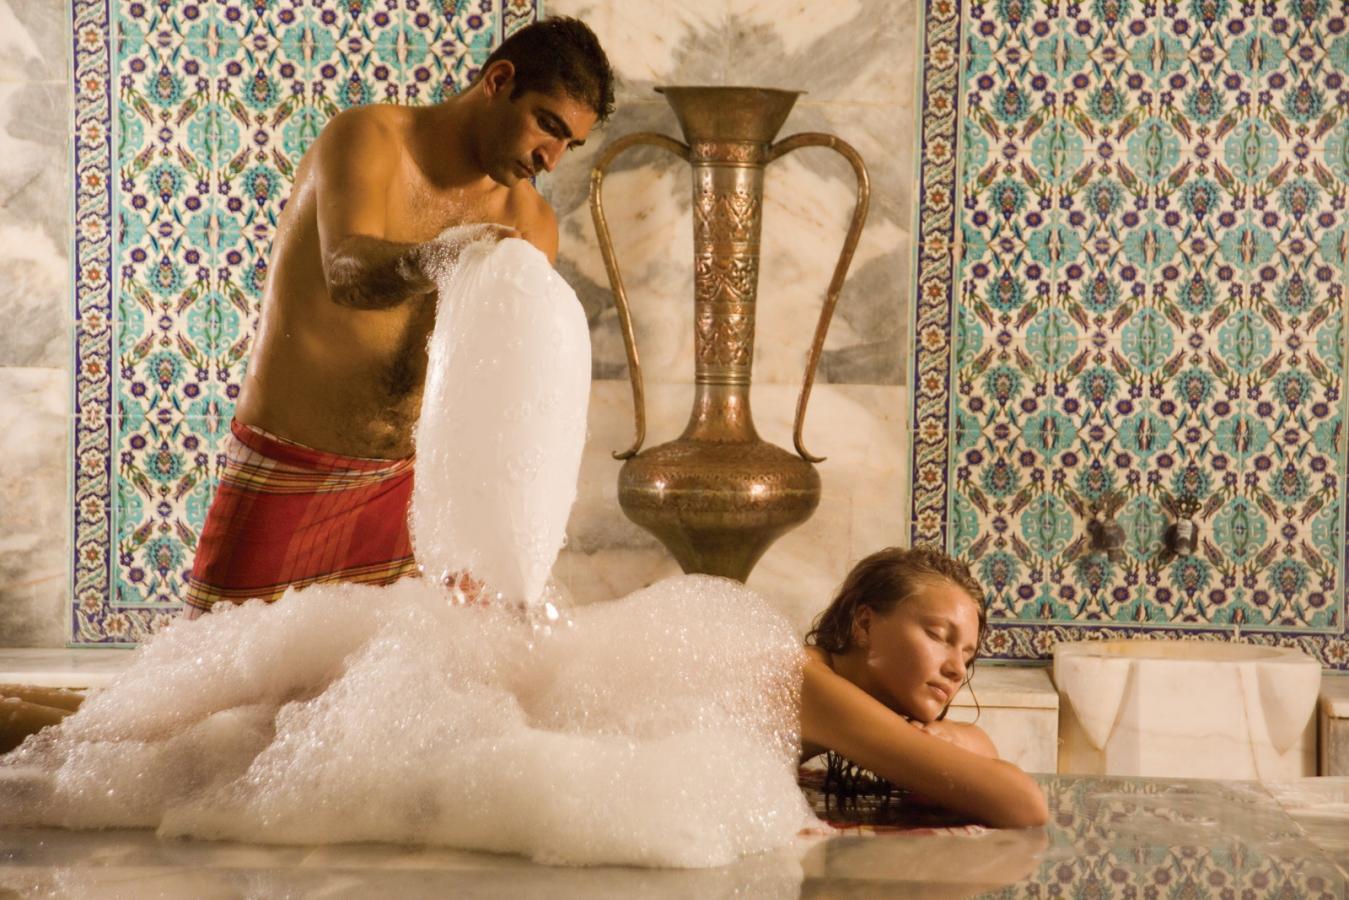 Relaxing massage at the traditional Turkish bath Hamam www.vigotour.com.